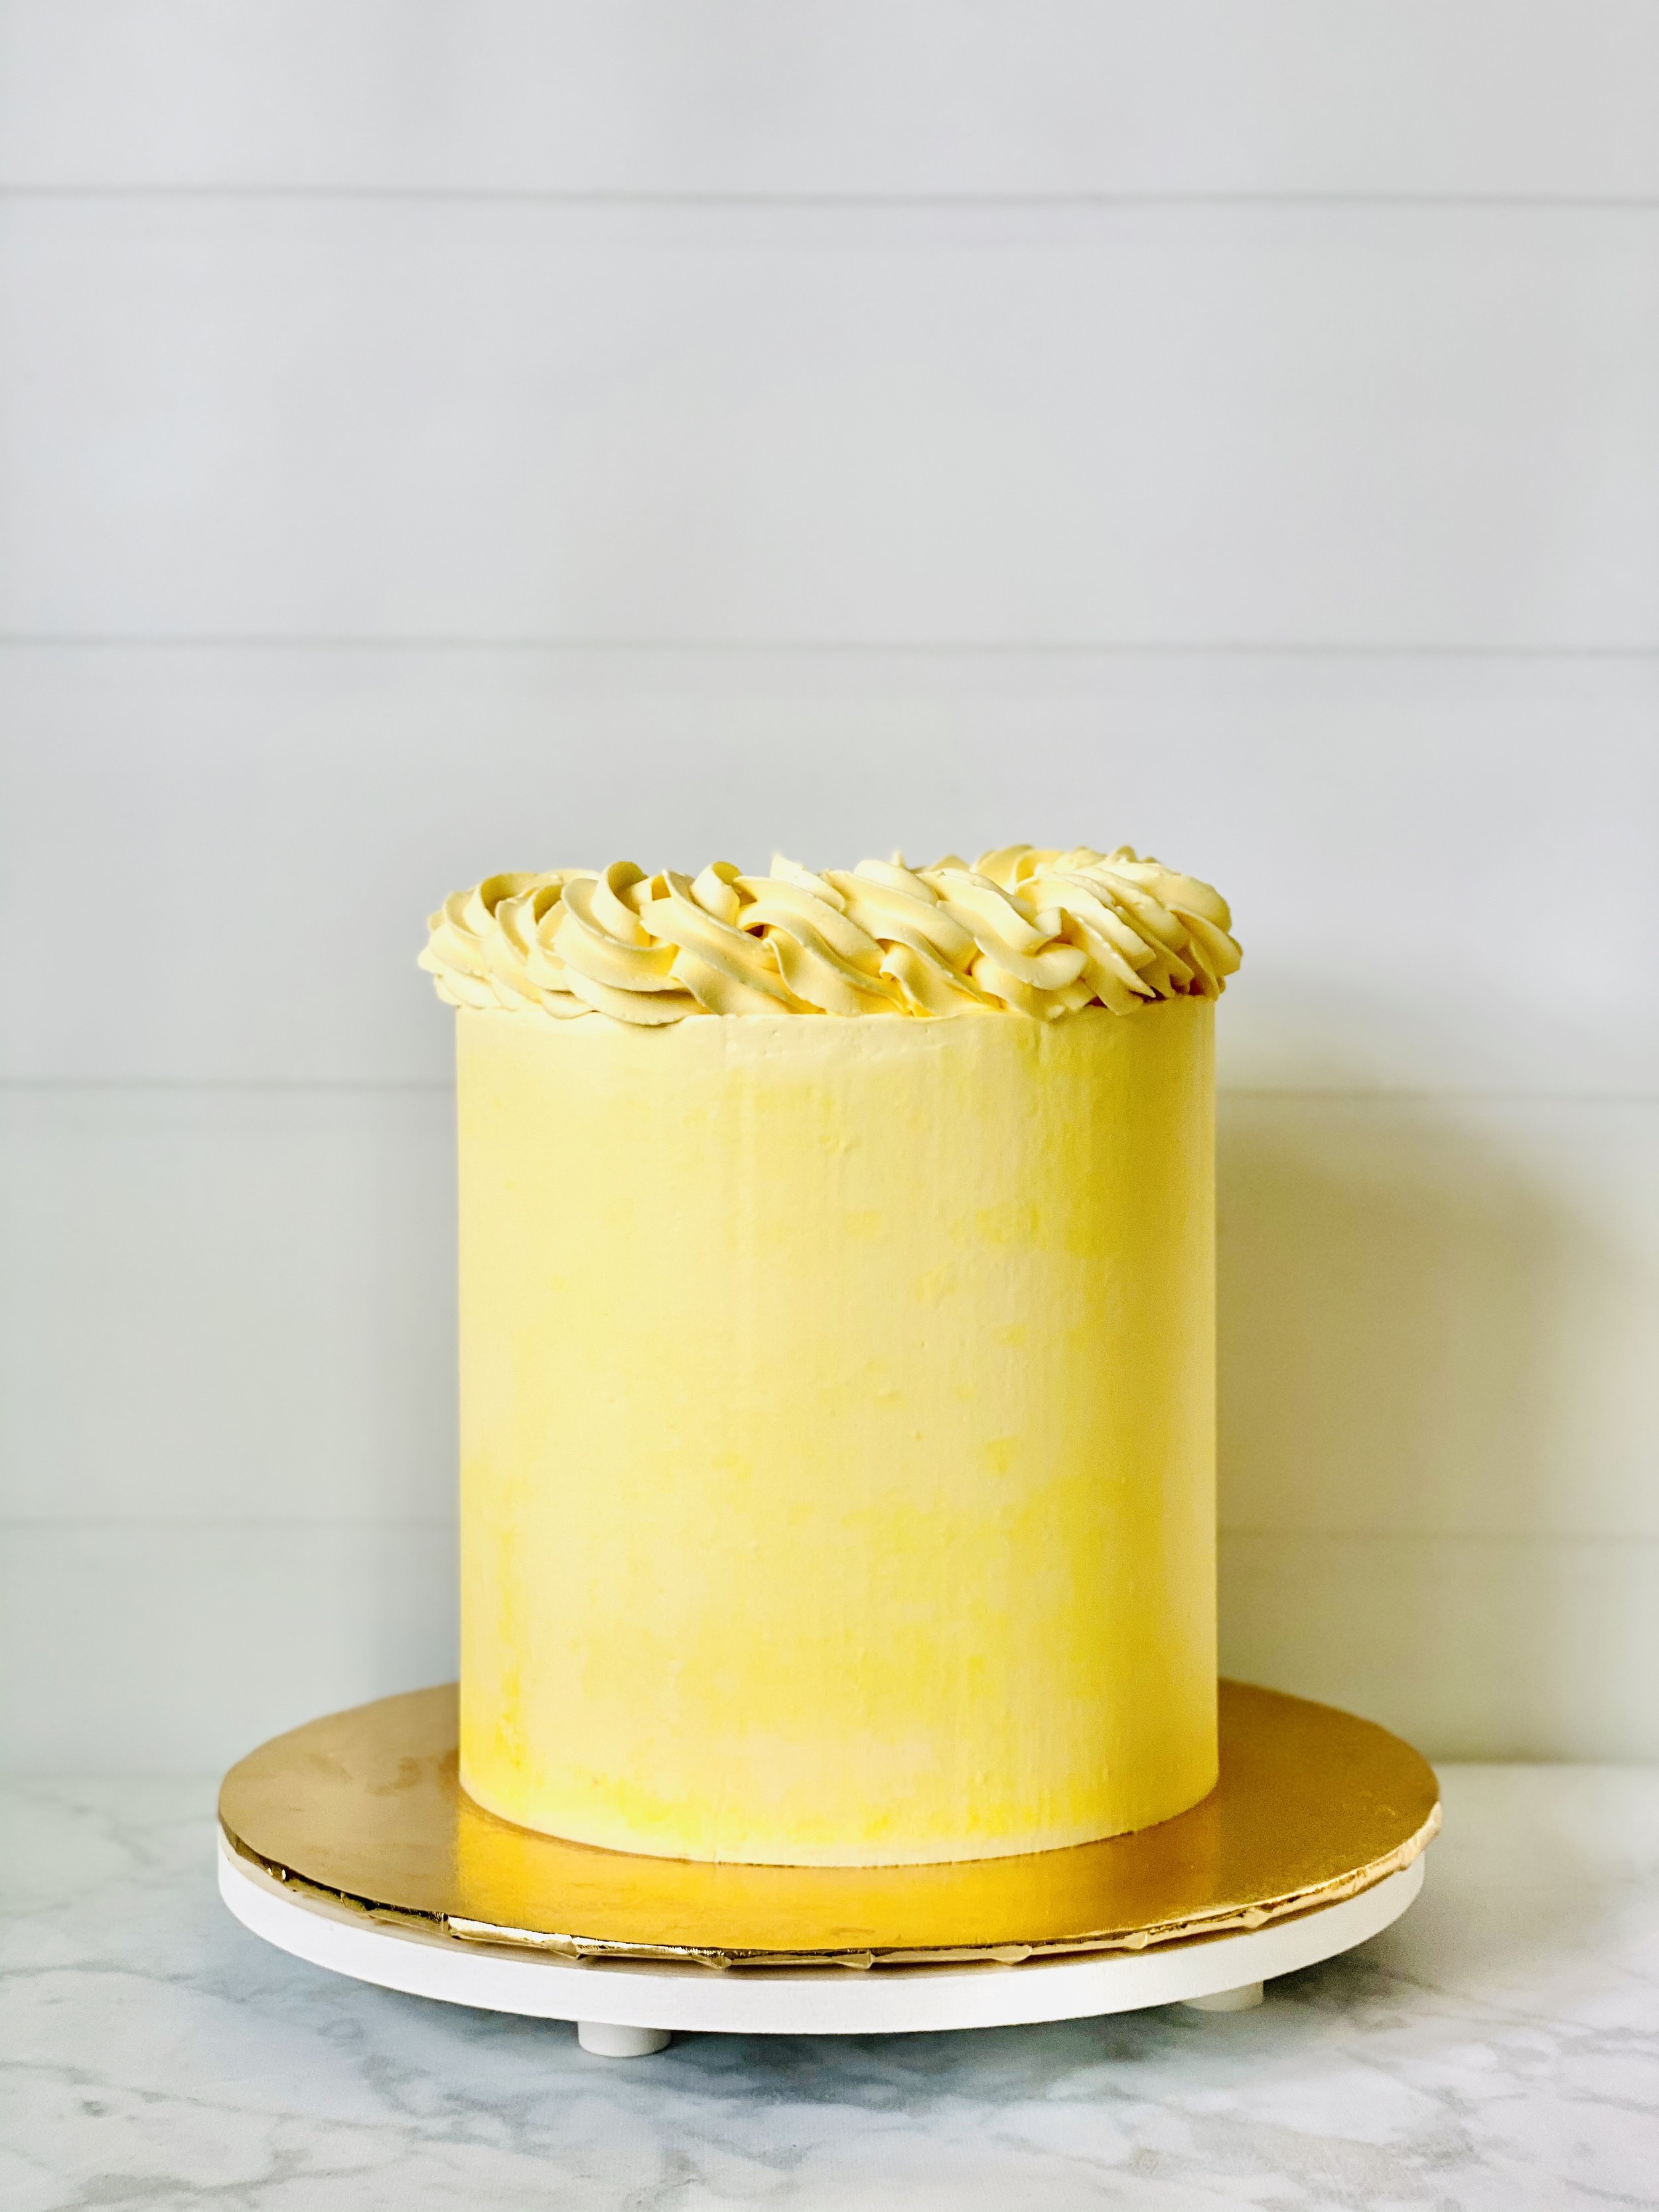 Sleek and Simple Cake Design — Linden Park Whisk, a gluten-free cake studio